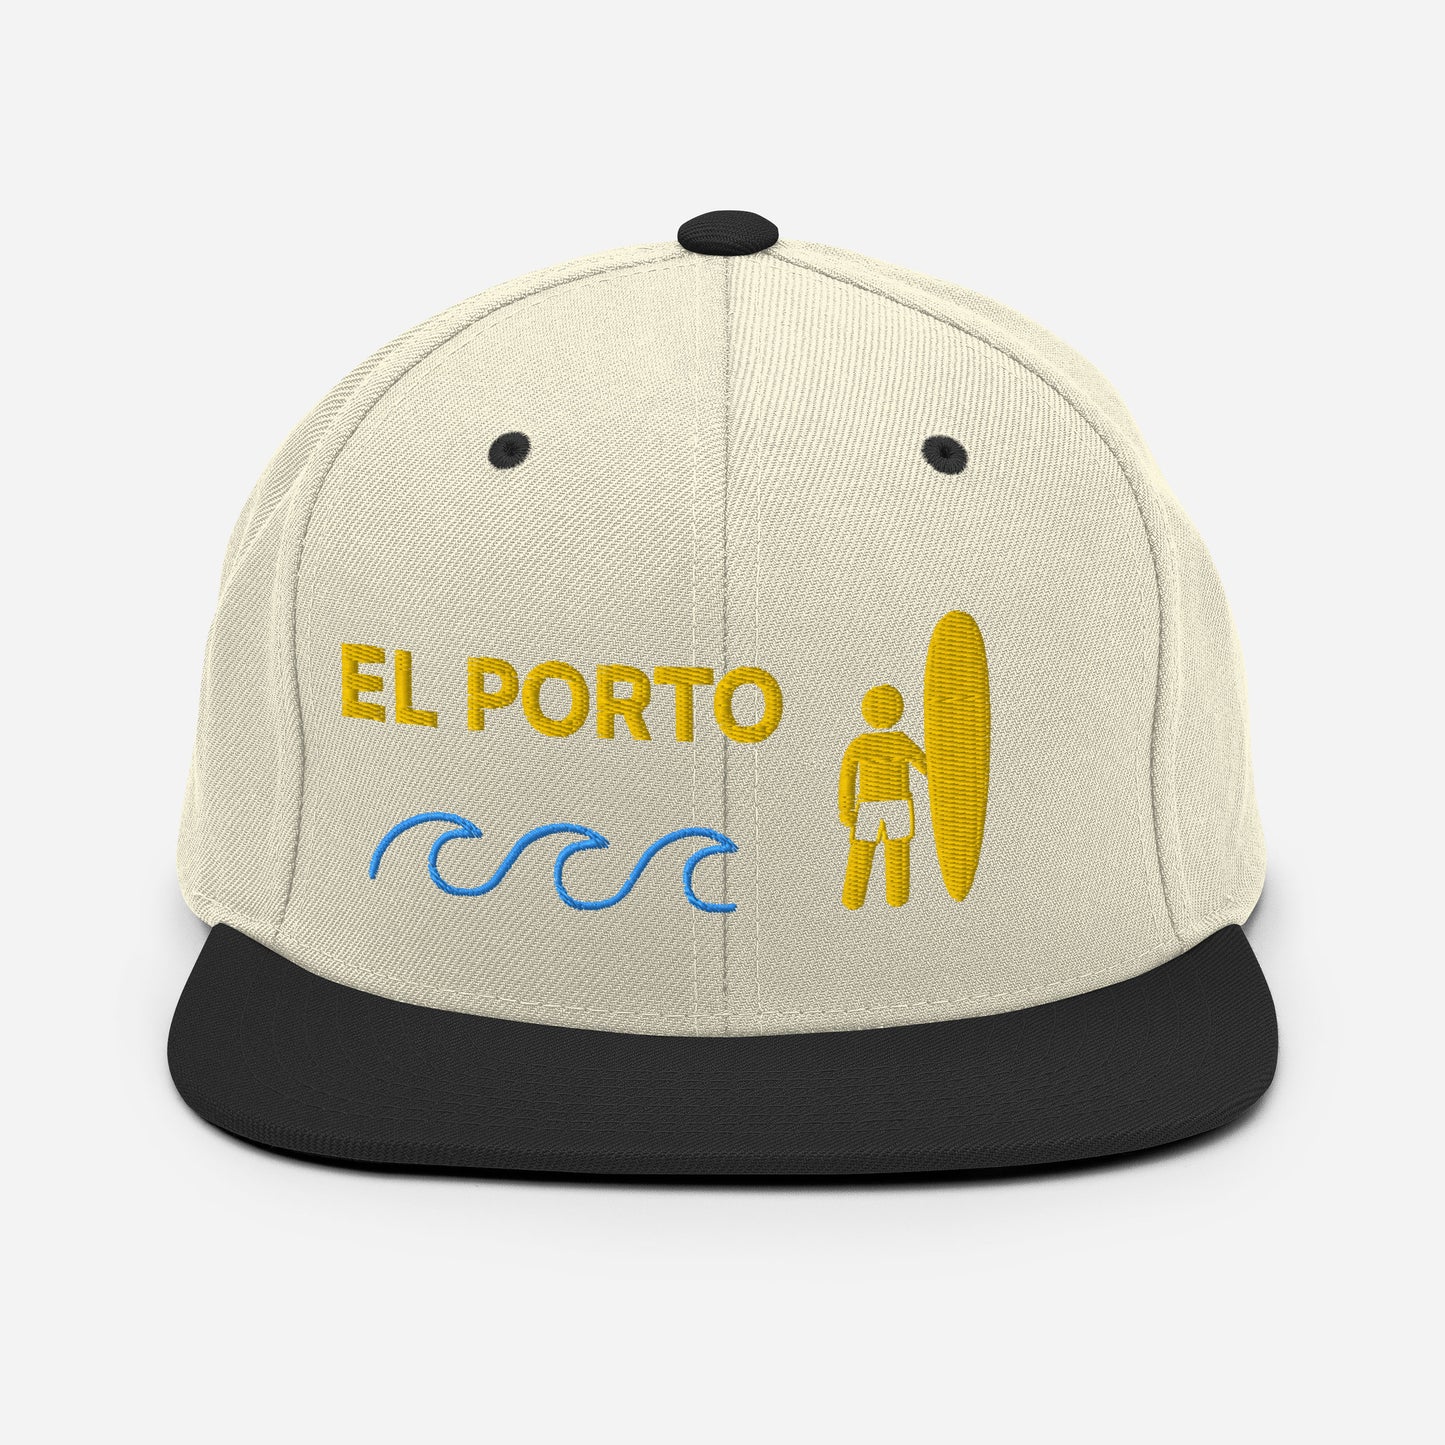 El Porto Manhattan Beach - California - South Bay - Snapback Hat - Snapback Hat